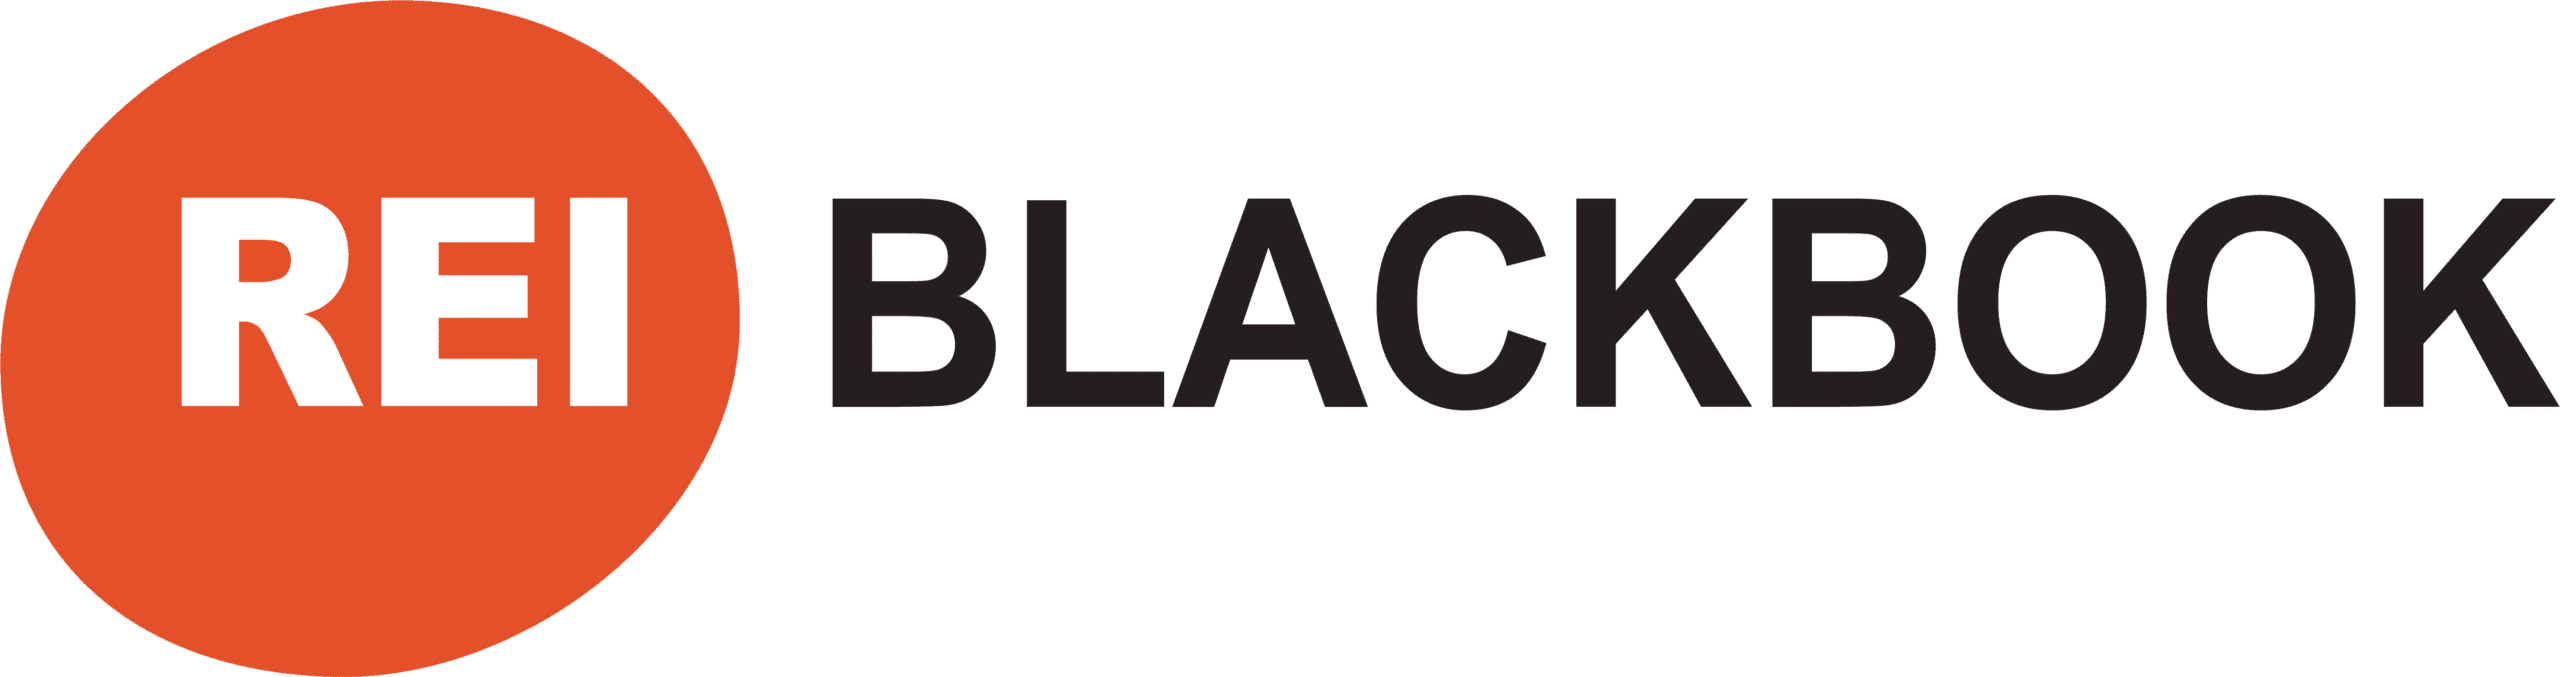 rei blackbook logo